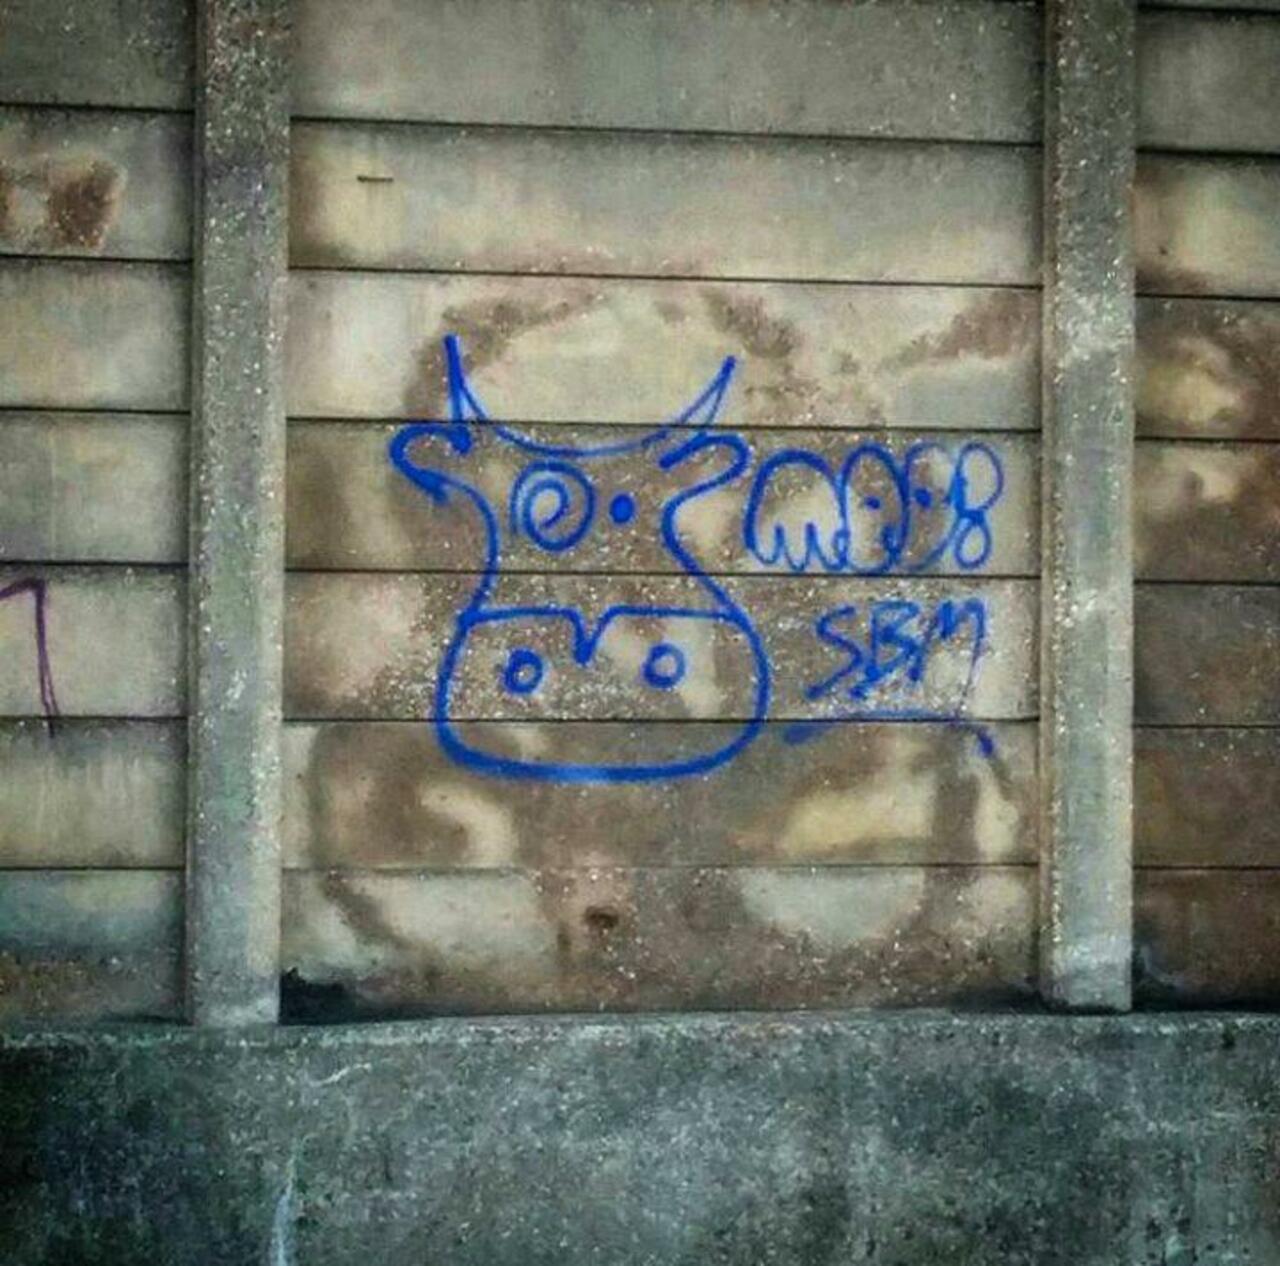 RT @artpushr: via #mangio_lattine "http://bit.ly/1MiwOxH" #graffiti #streetart http://t.co/5bRXZramP9